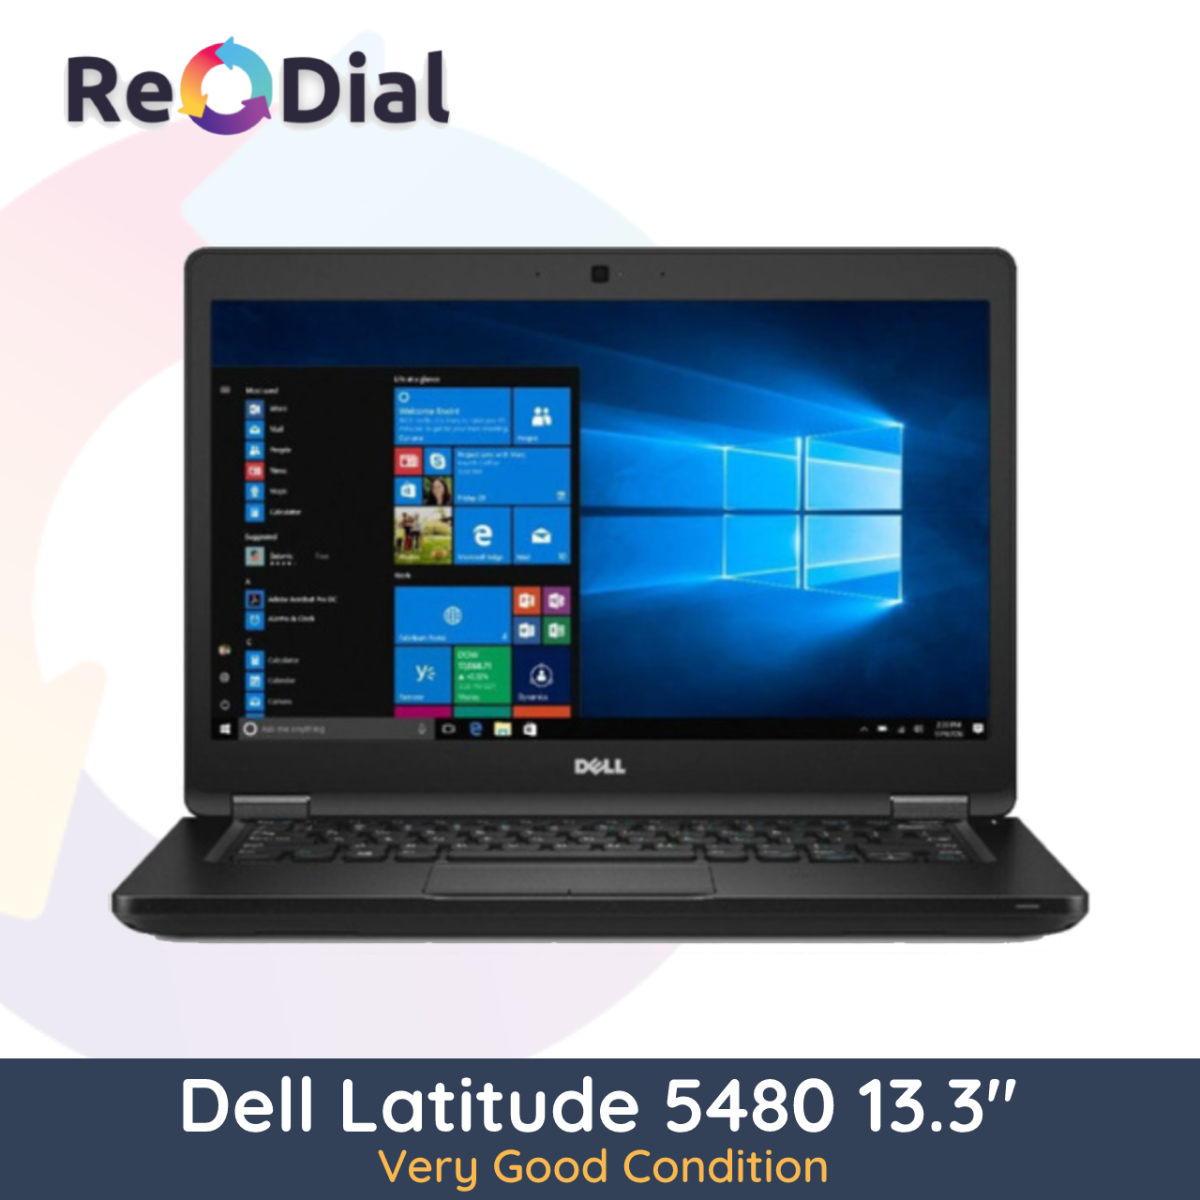 Dell Latitude 5480 13.3" Laptop i5-6300U 256GB 8GB/16GB RAM - Very Good Condition